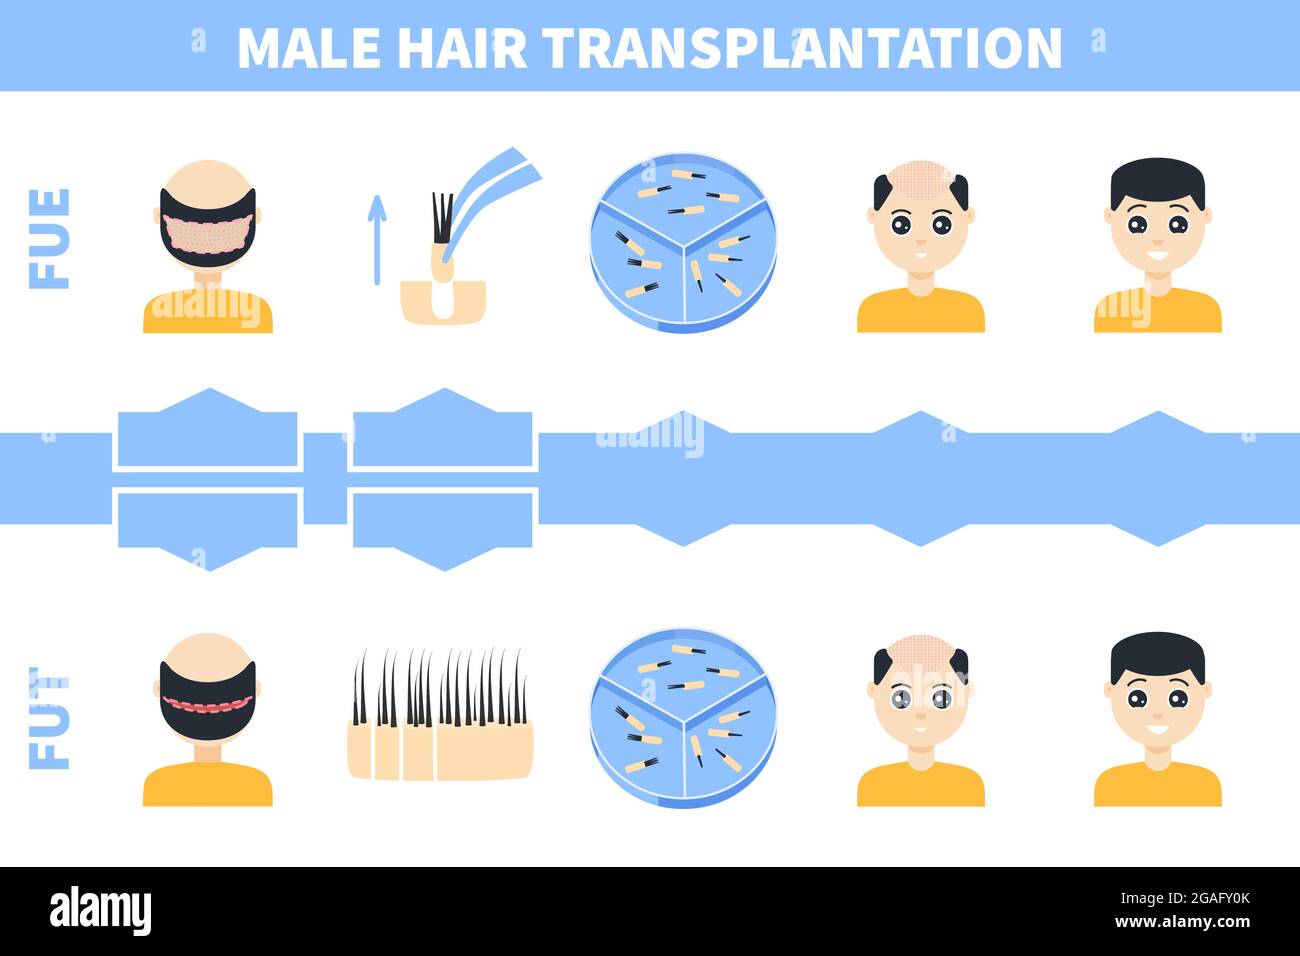 Hair transplantation in men, illustration Stock Photo